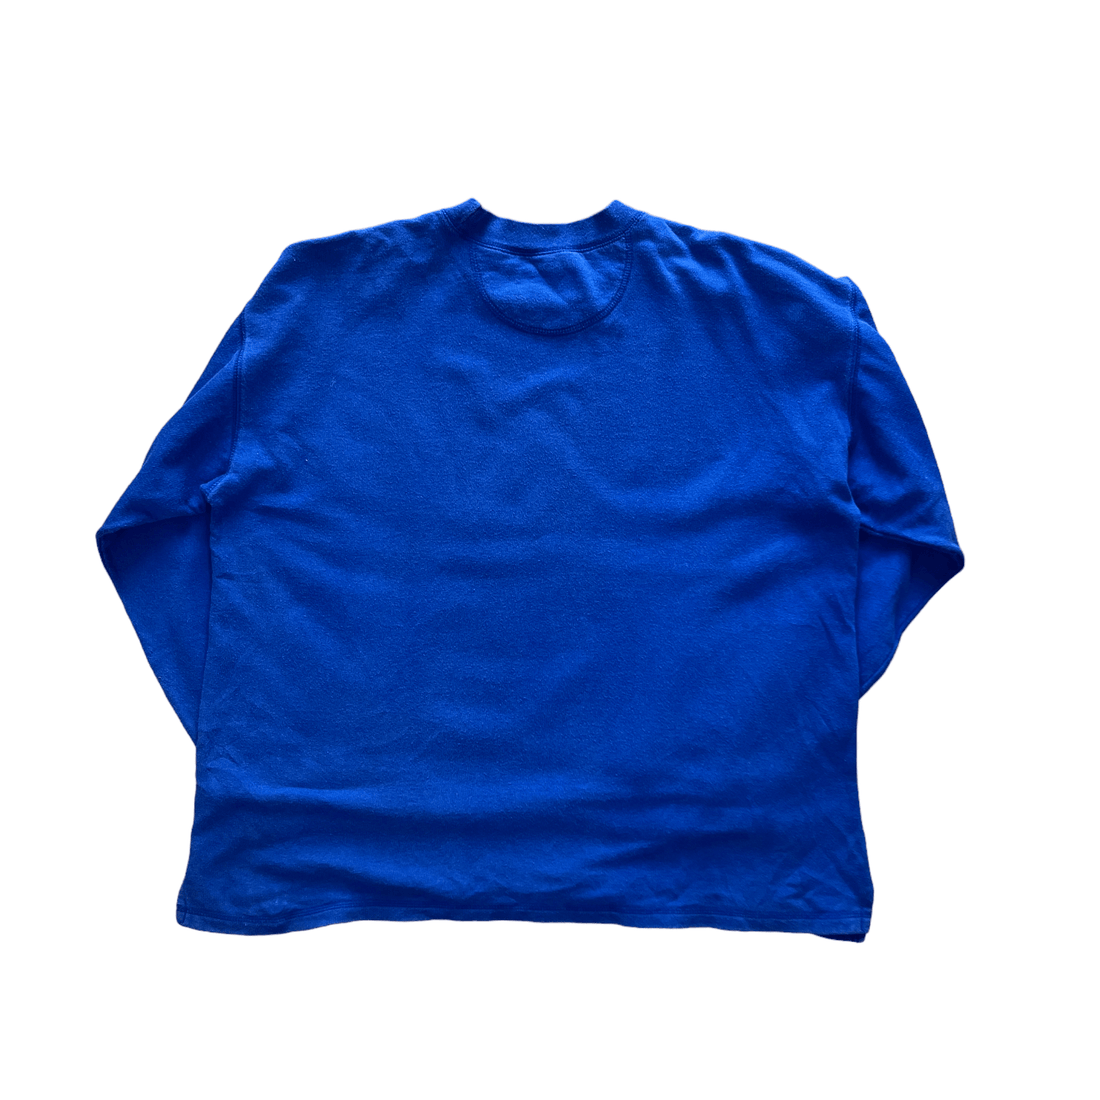 Vintage 90s Blue Adidas Equipment Sweatshirt - Extra Large - The Streetwear Studio